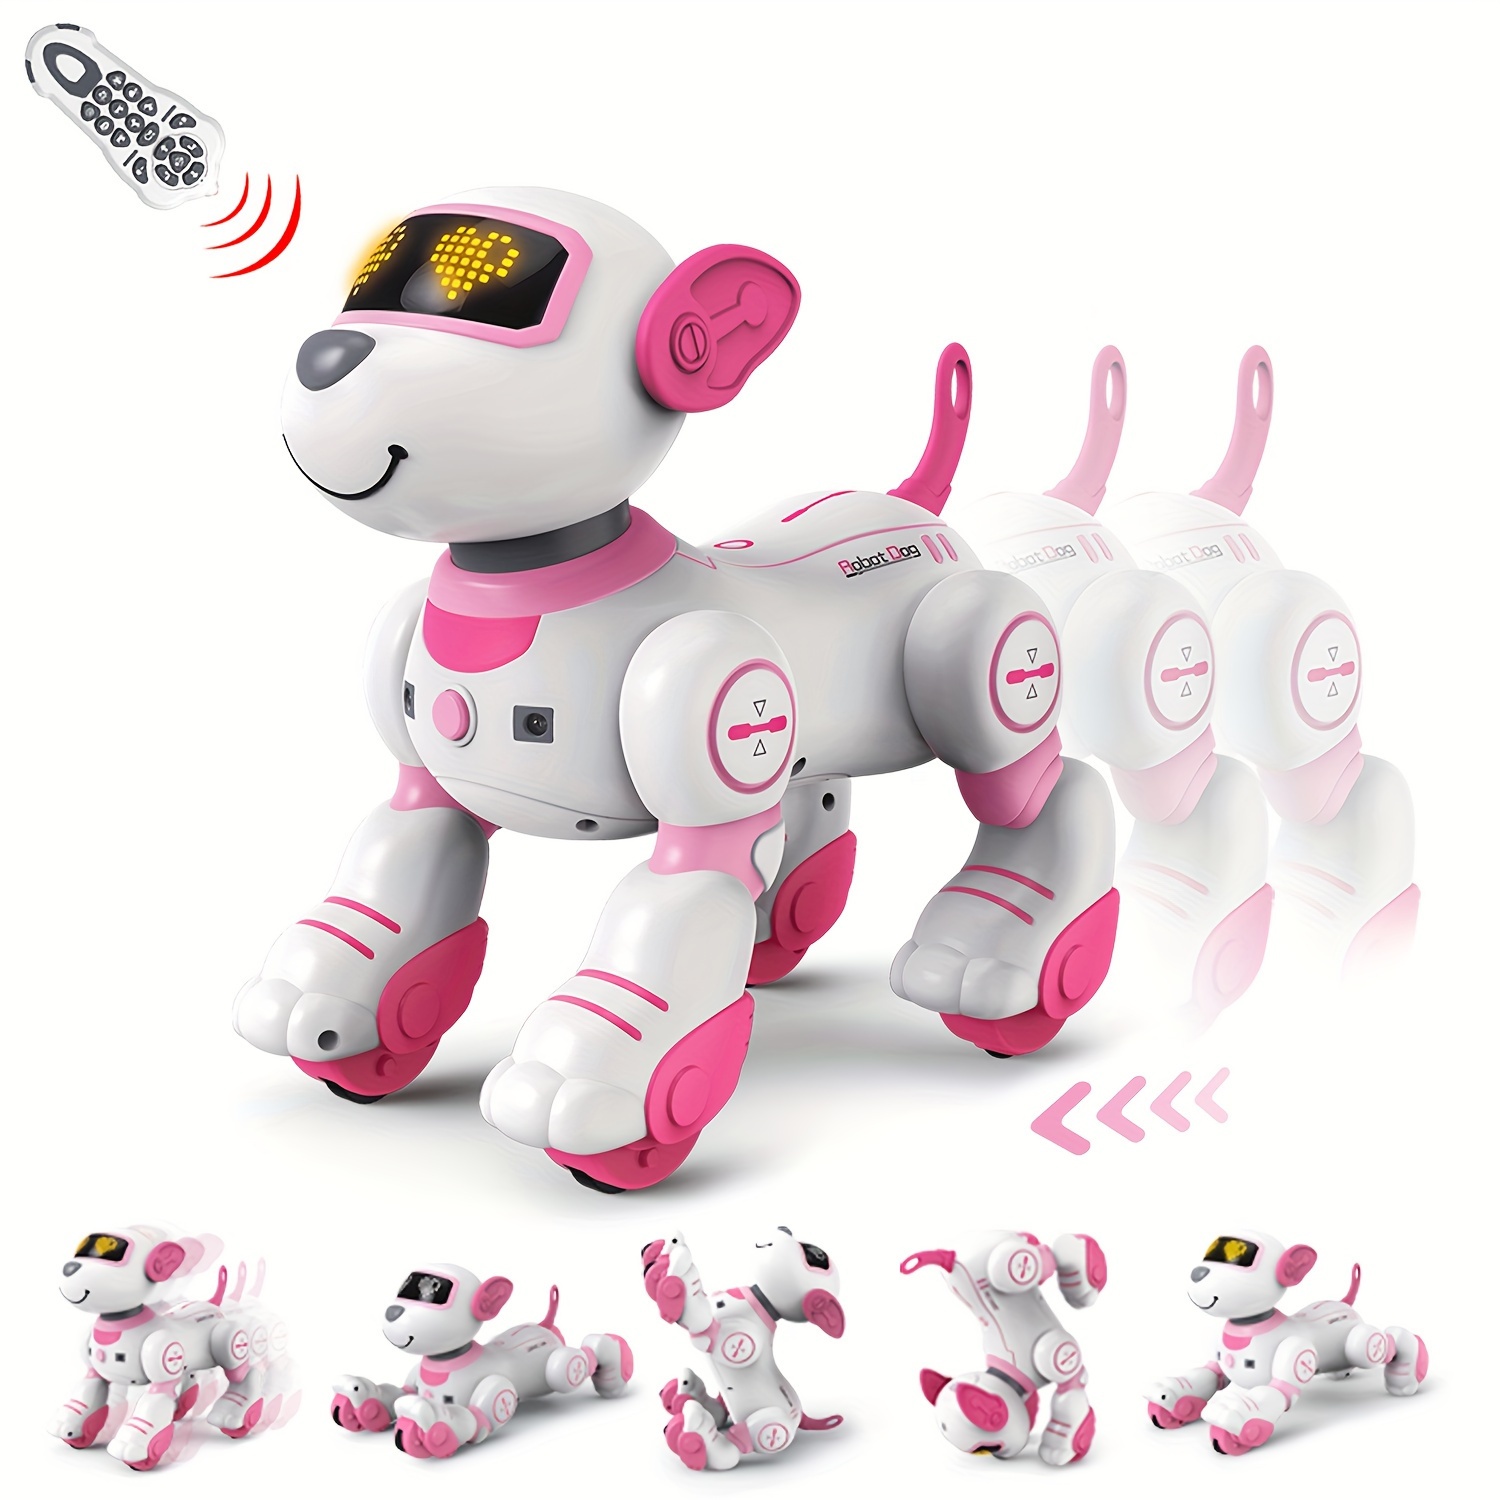  aovowog Perro Robot Juguete Buddy Interactivo para